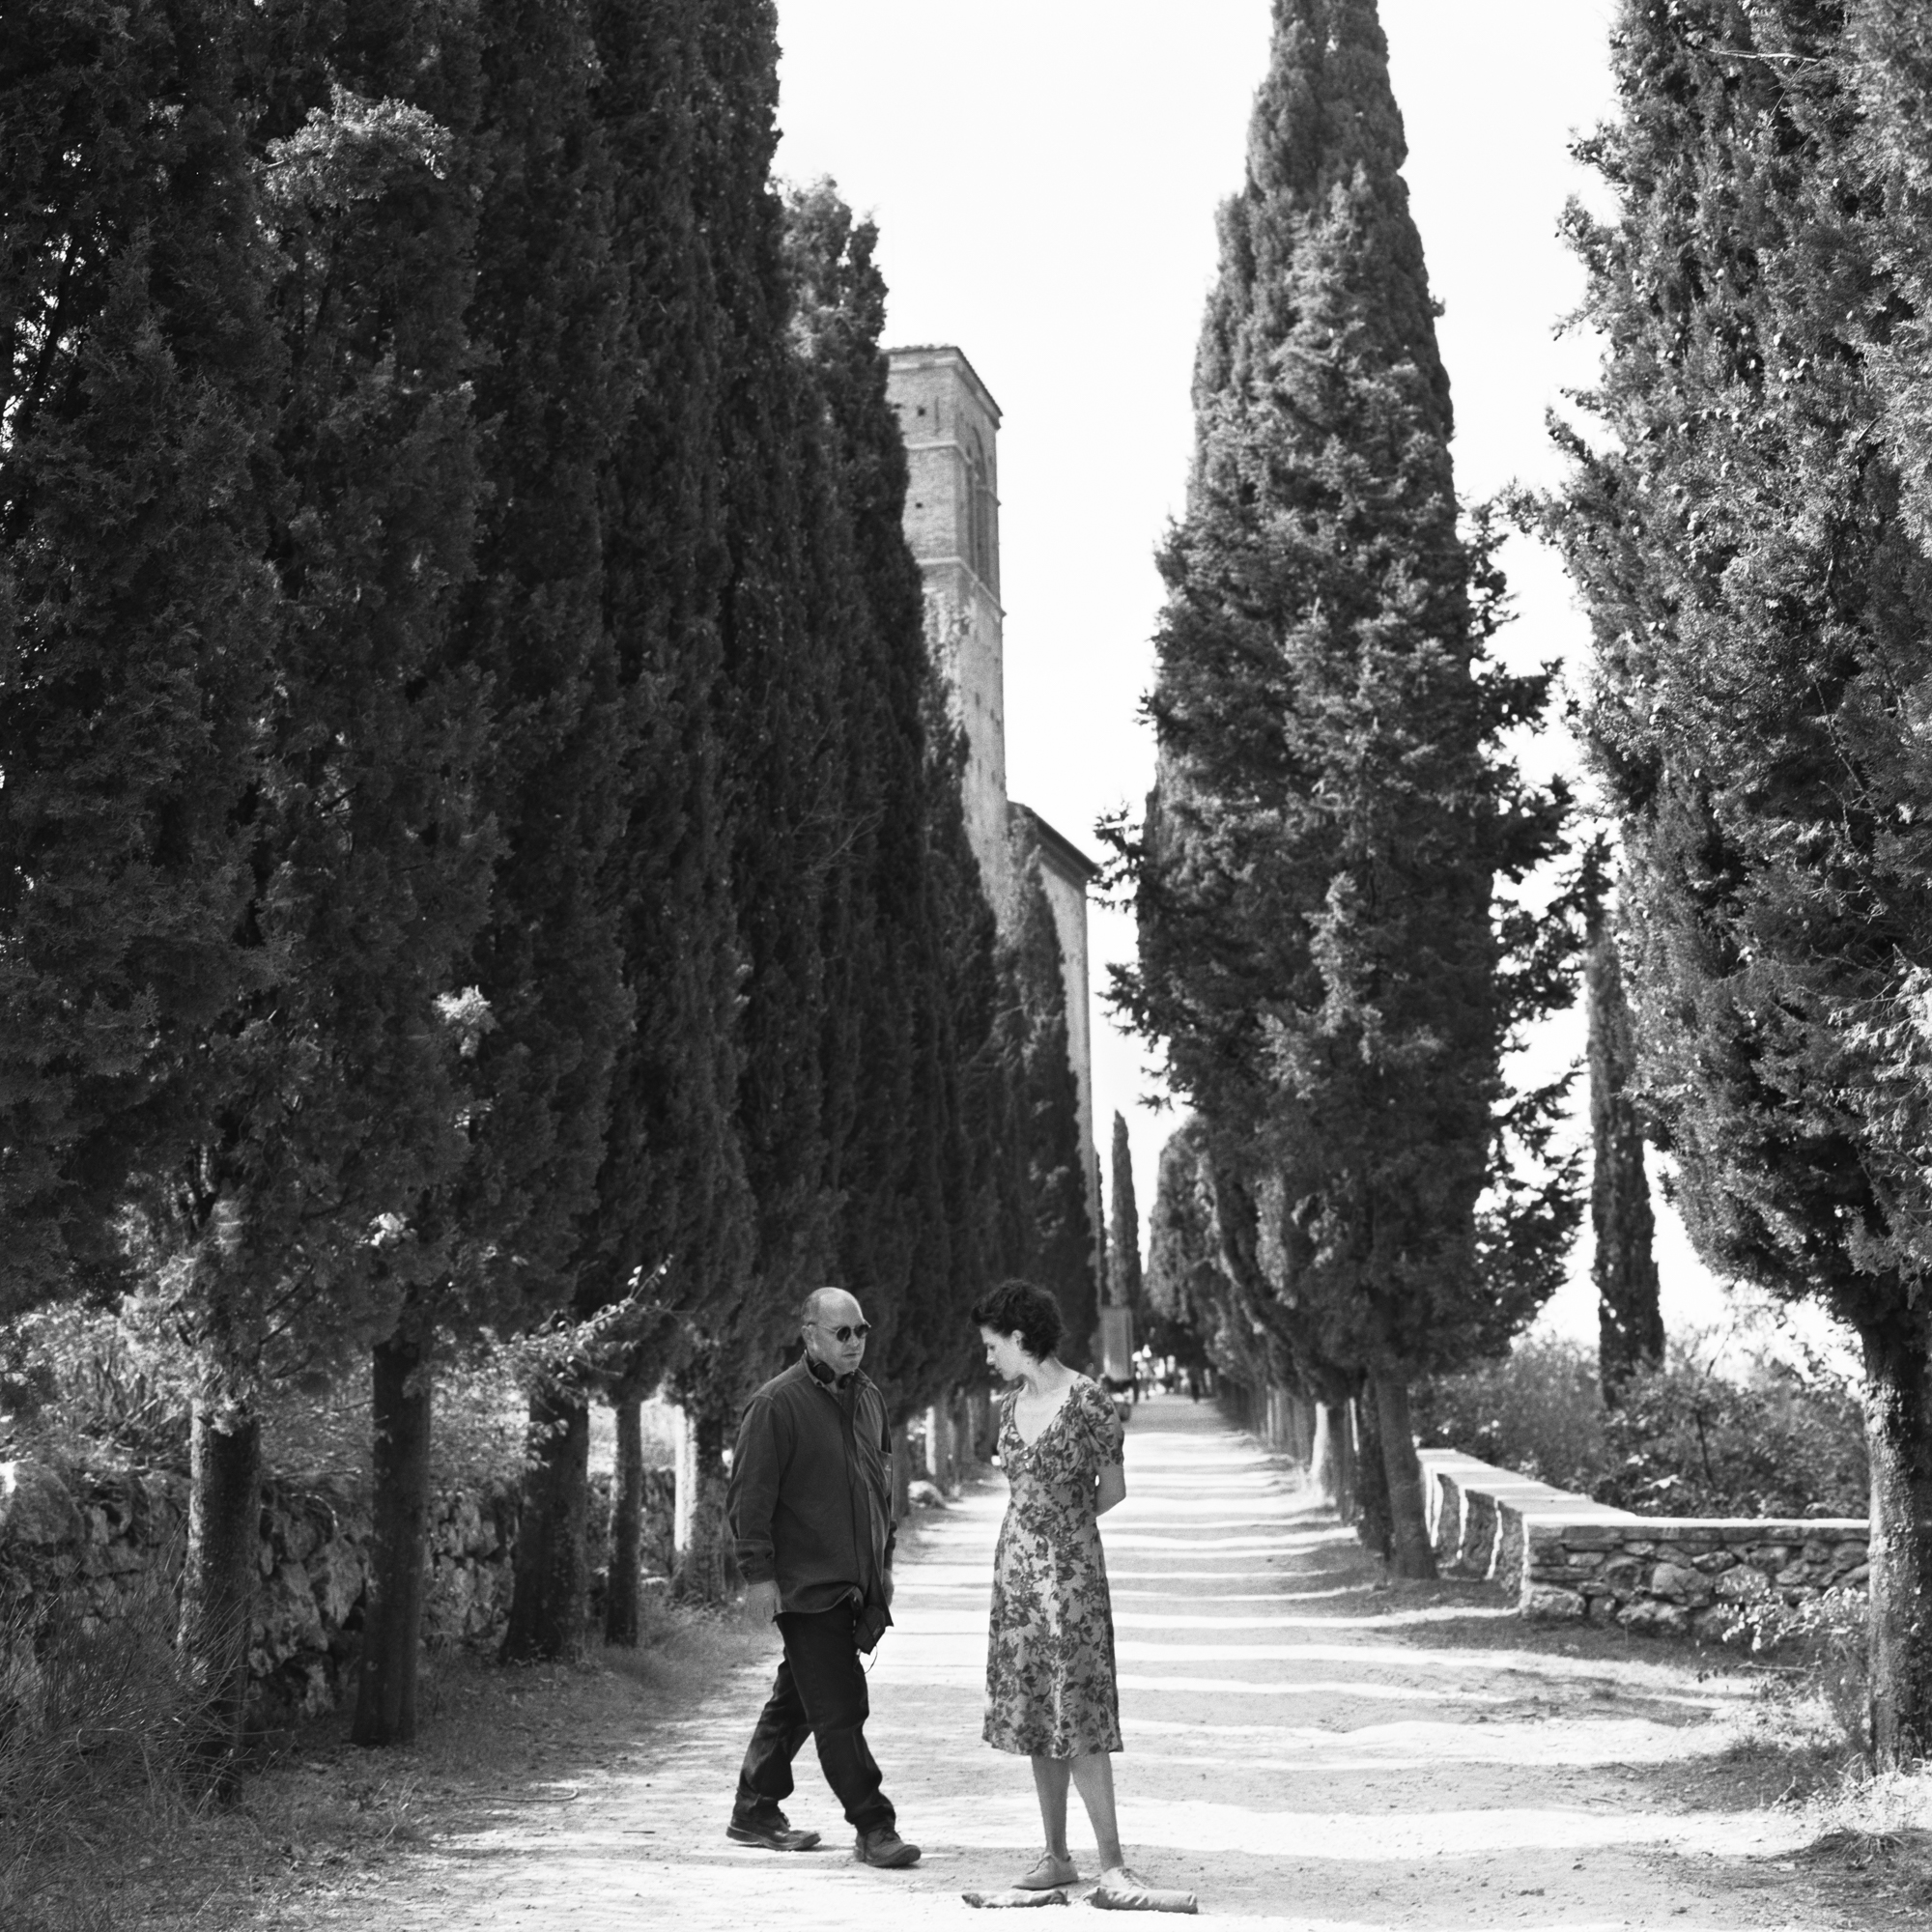 Anthony Minghella and Juliette Binoche, "The English Patient", Sant'Anna in Camprena, Pienza, Tuscany, Italy, 1995